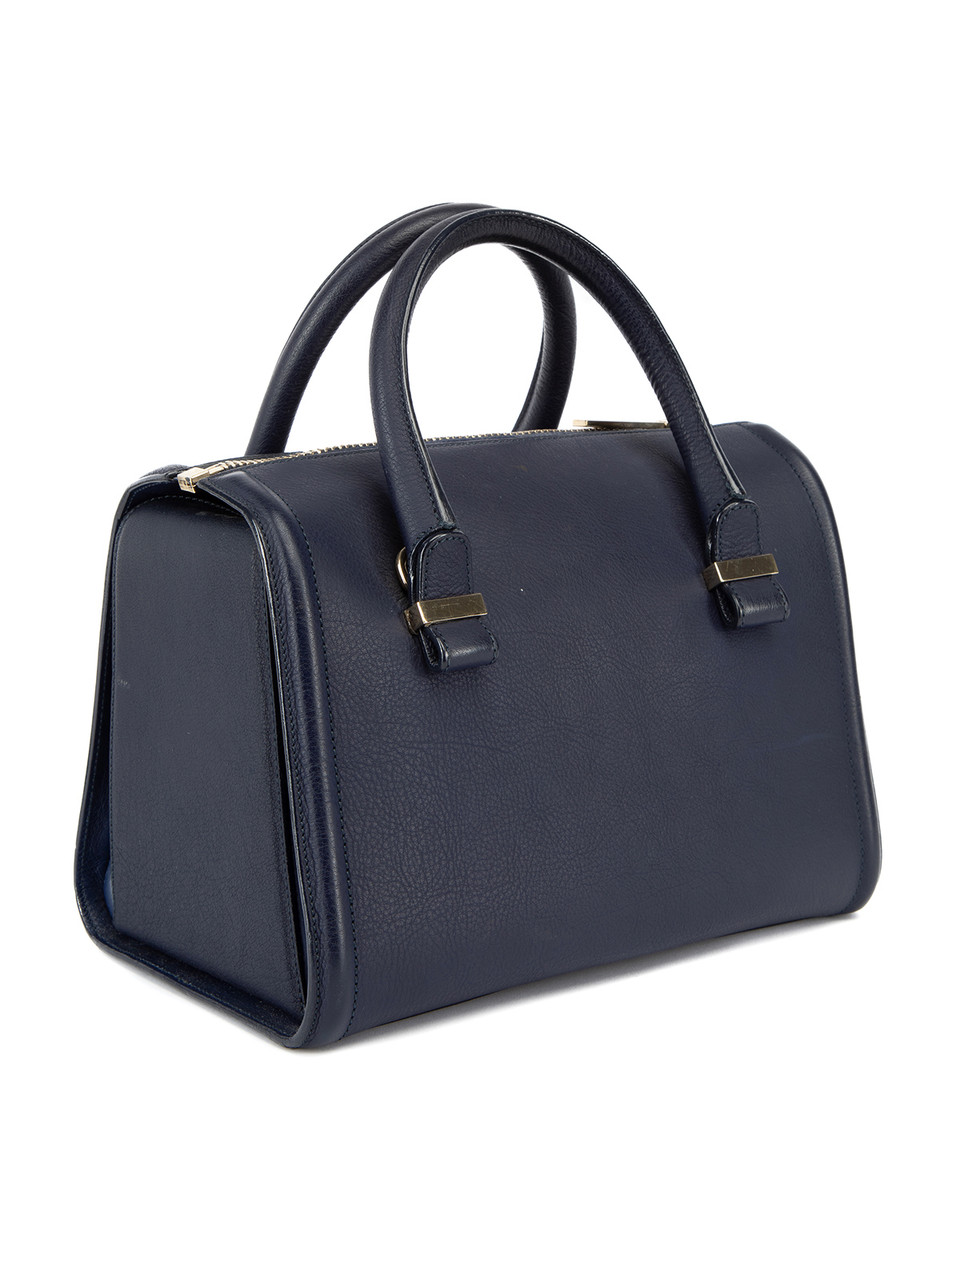 Victoria Beckham Navy Blue Leather Seven Bowling Rolled Handle Bag